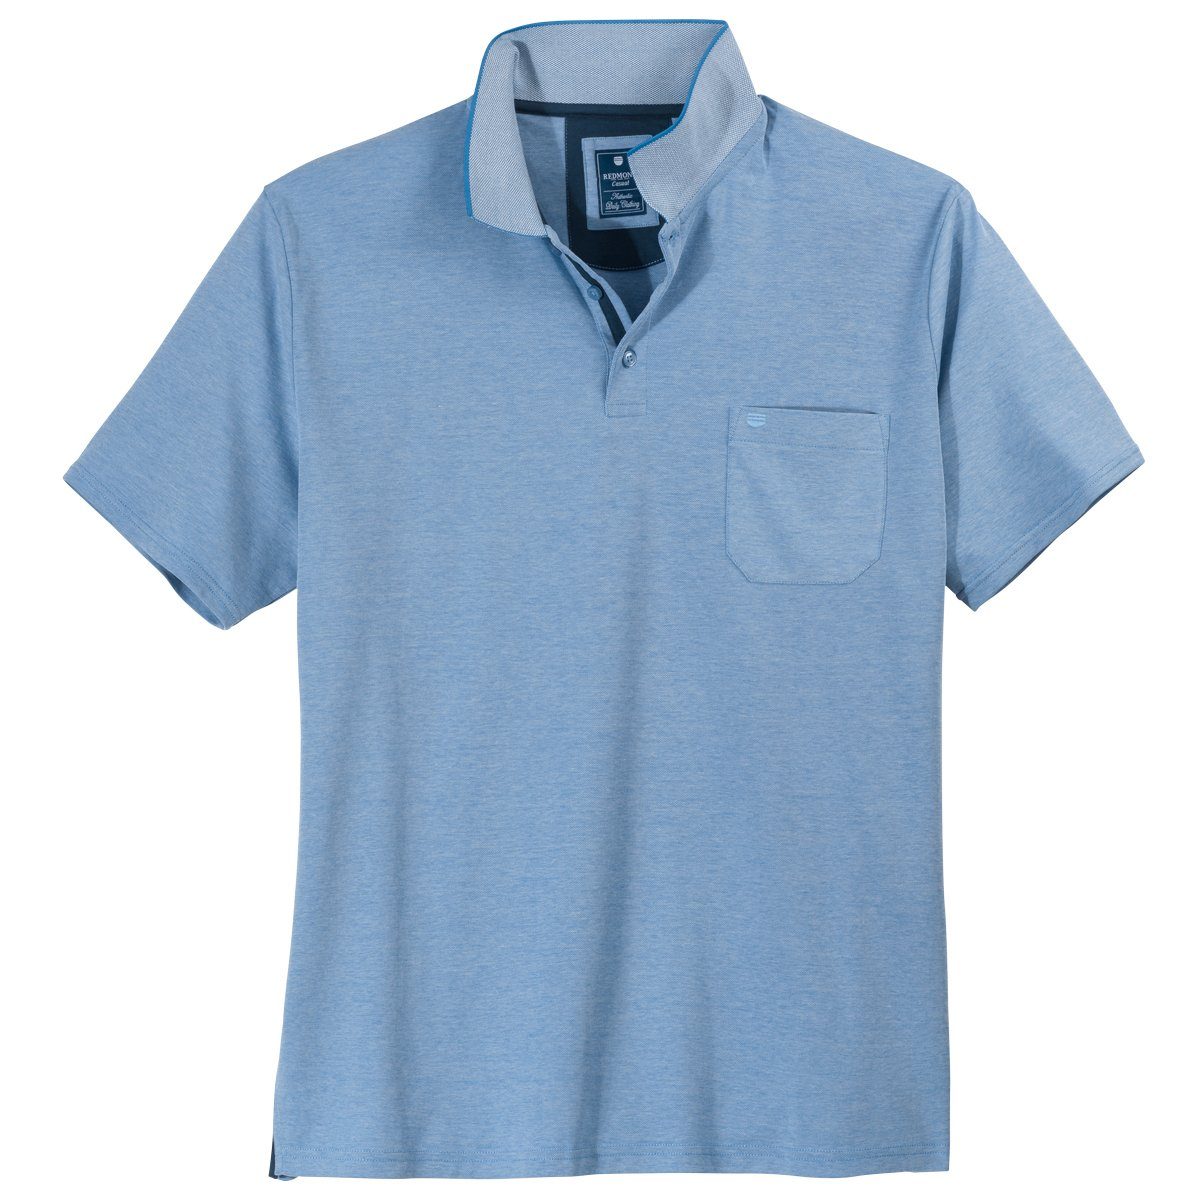 Redmond Poloshirt Große Größen Poloshirt hellblau melange "Wash & Wear" Redmond | Poloshirts